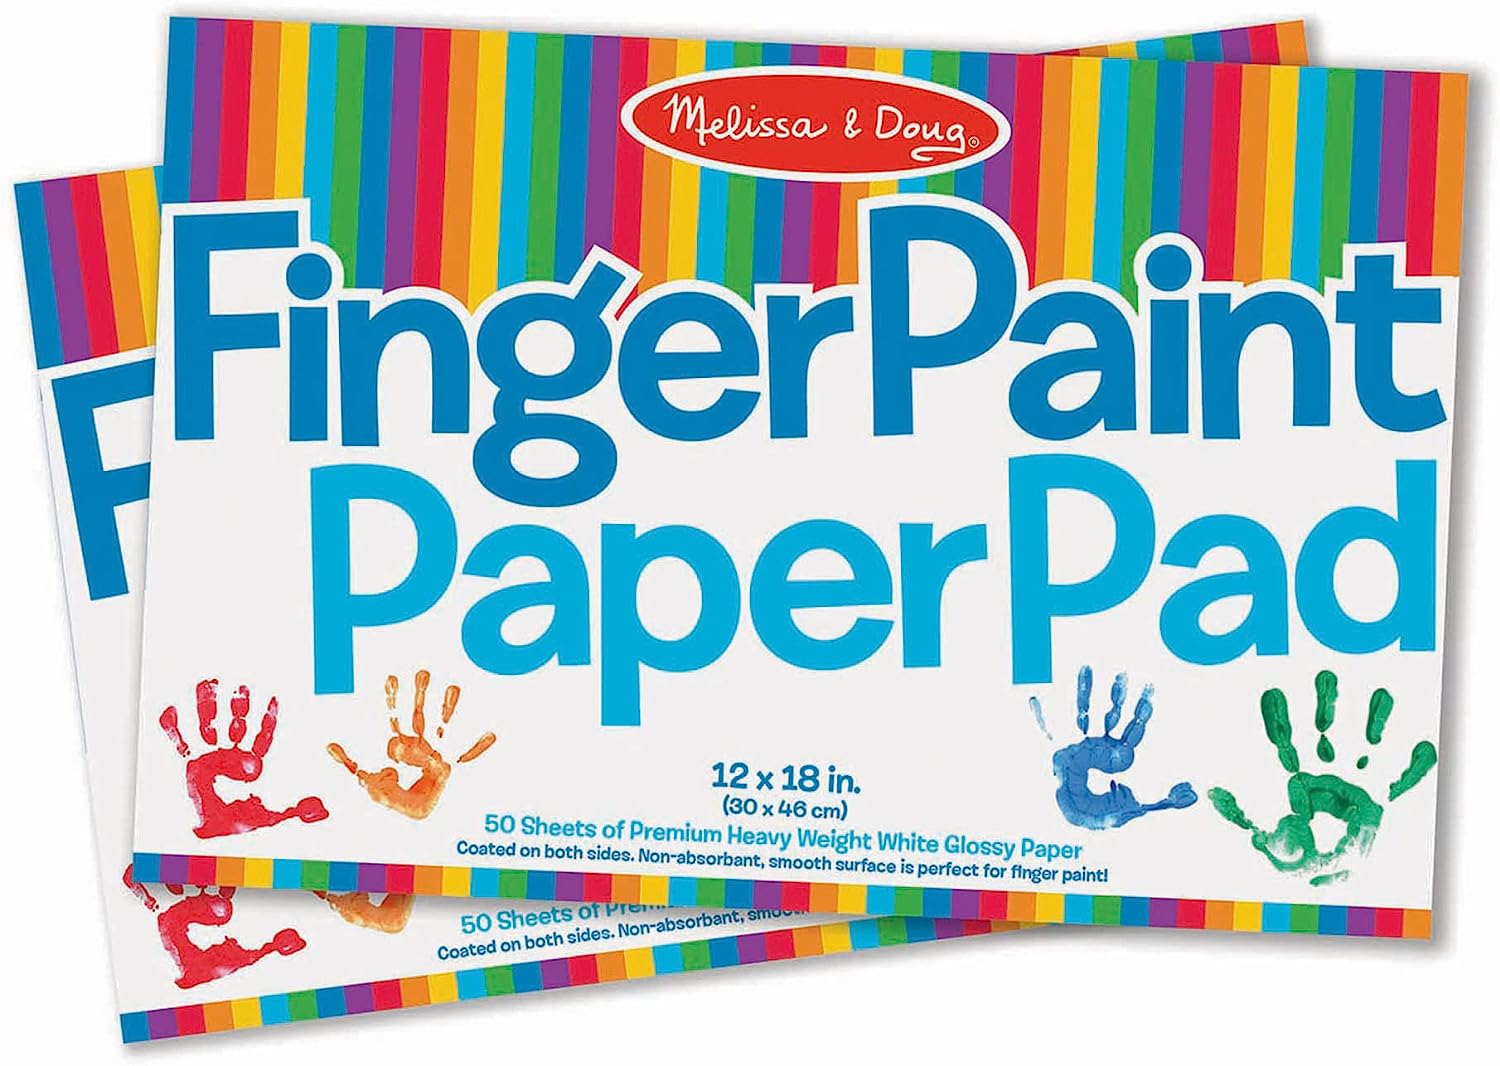 Melissa & Doug Finger Paint Paper Pad (12 x 18 inches) [...]